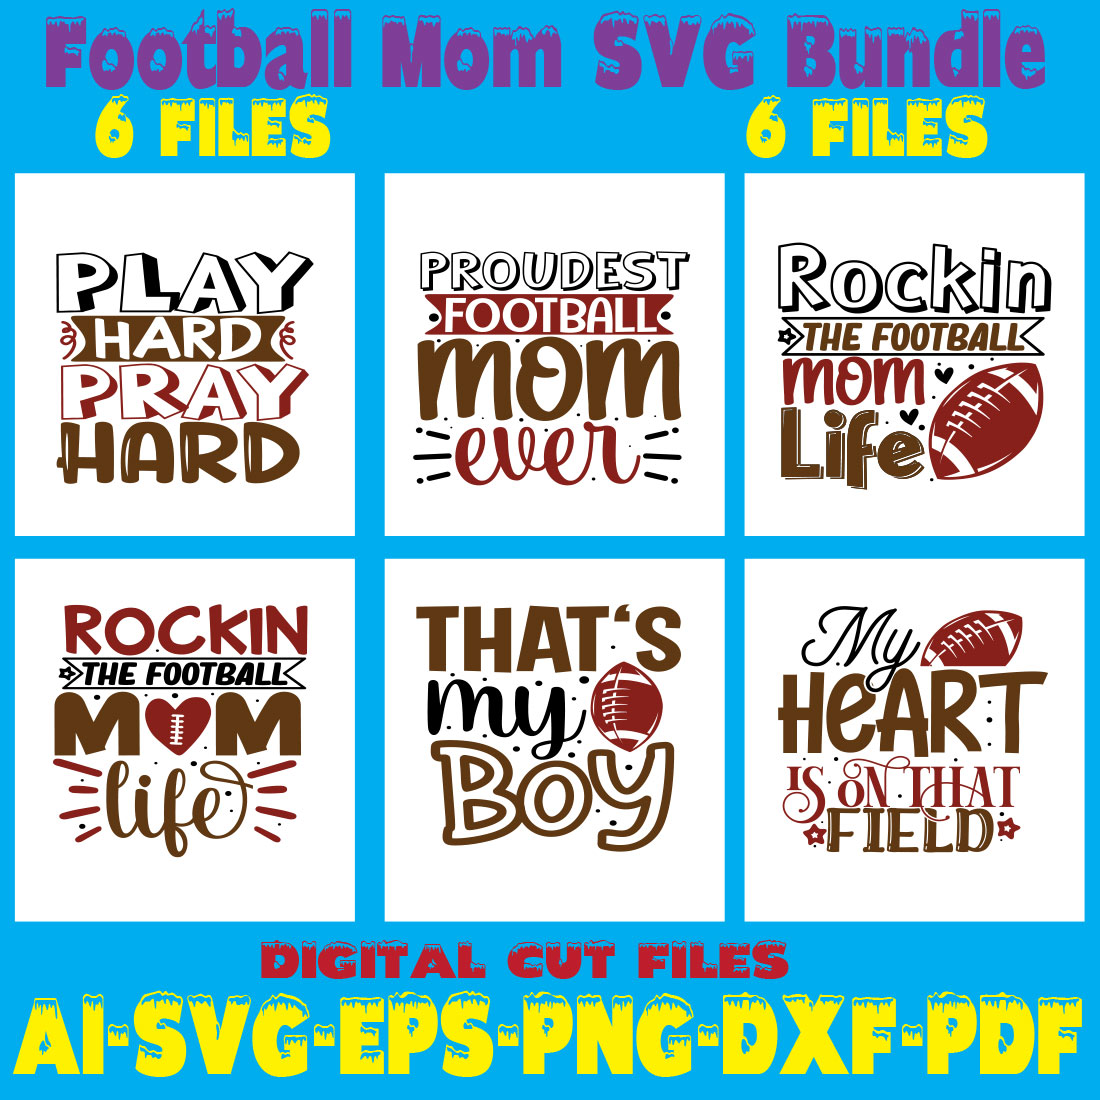 Football Mom SVG Bundle cover image.